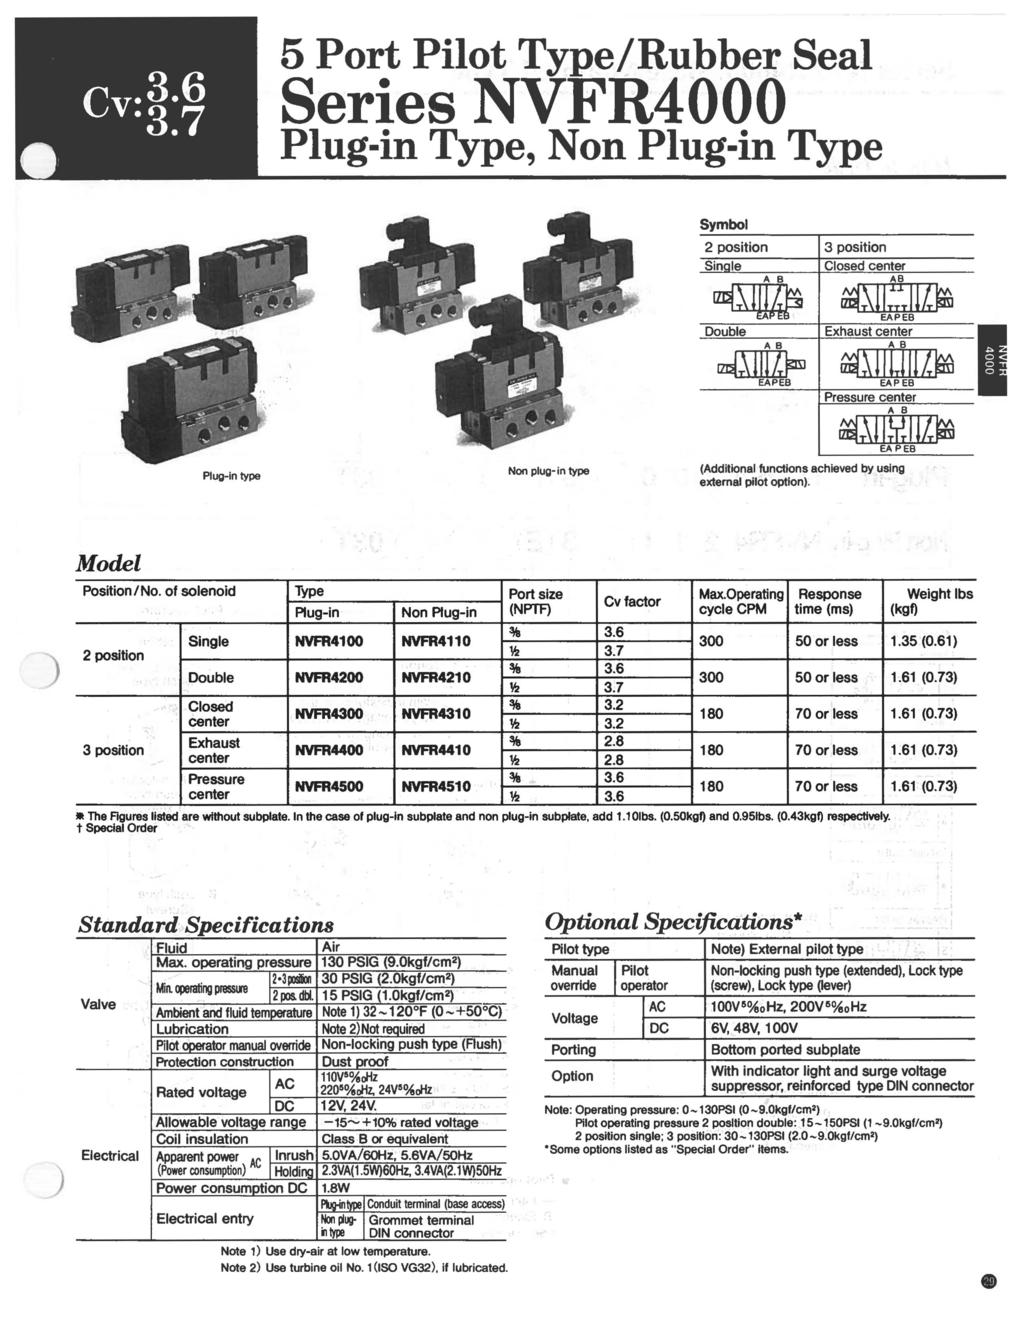 5 Port Pilot Type/Rubber Seal Series NVFR4 Plug-in Type, Non Plug-in Type Plug-in type Non plug- in type position position Single Closed center A B rzq~id~f Double AB ~Aml~ EAPEB AB ~~II;:~II&~ EAPEB